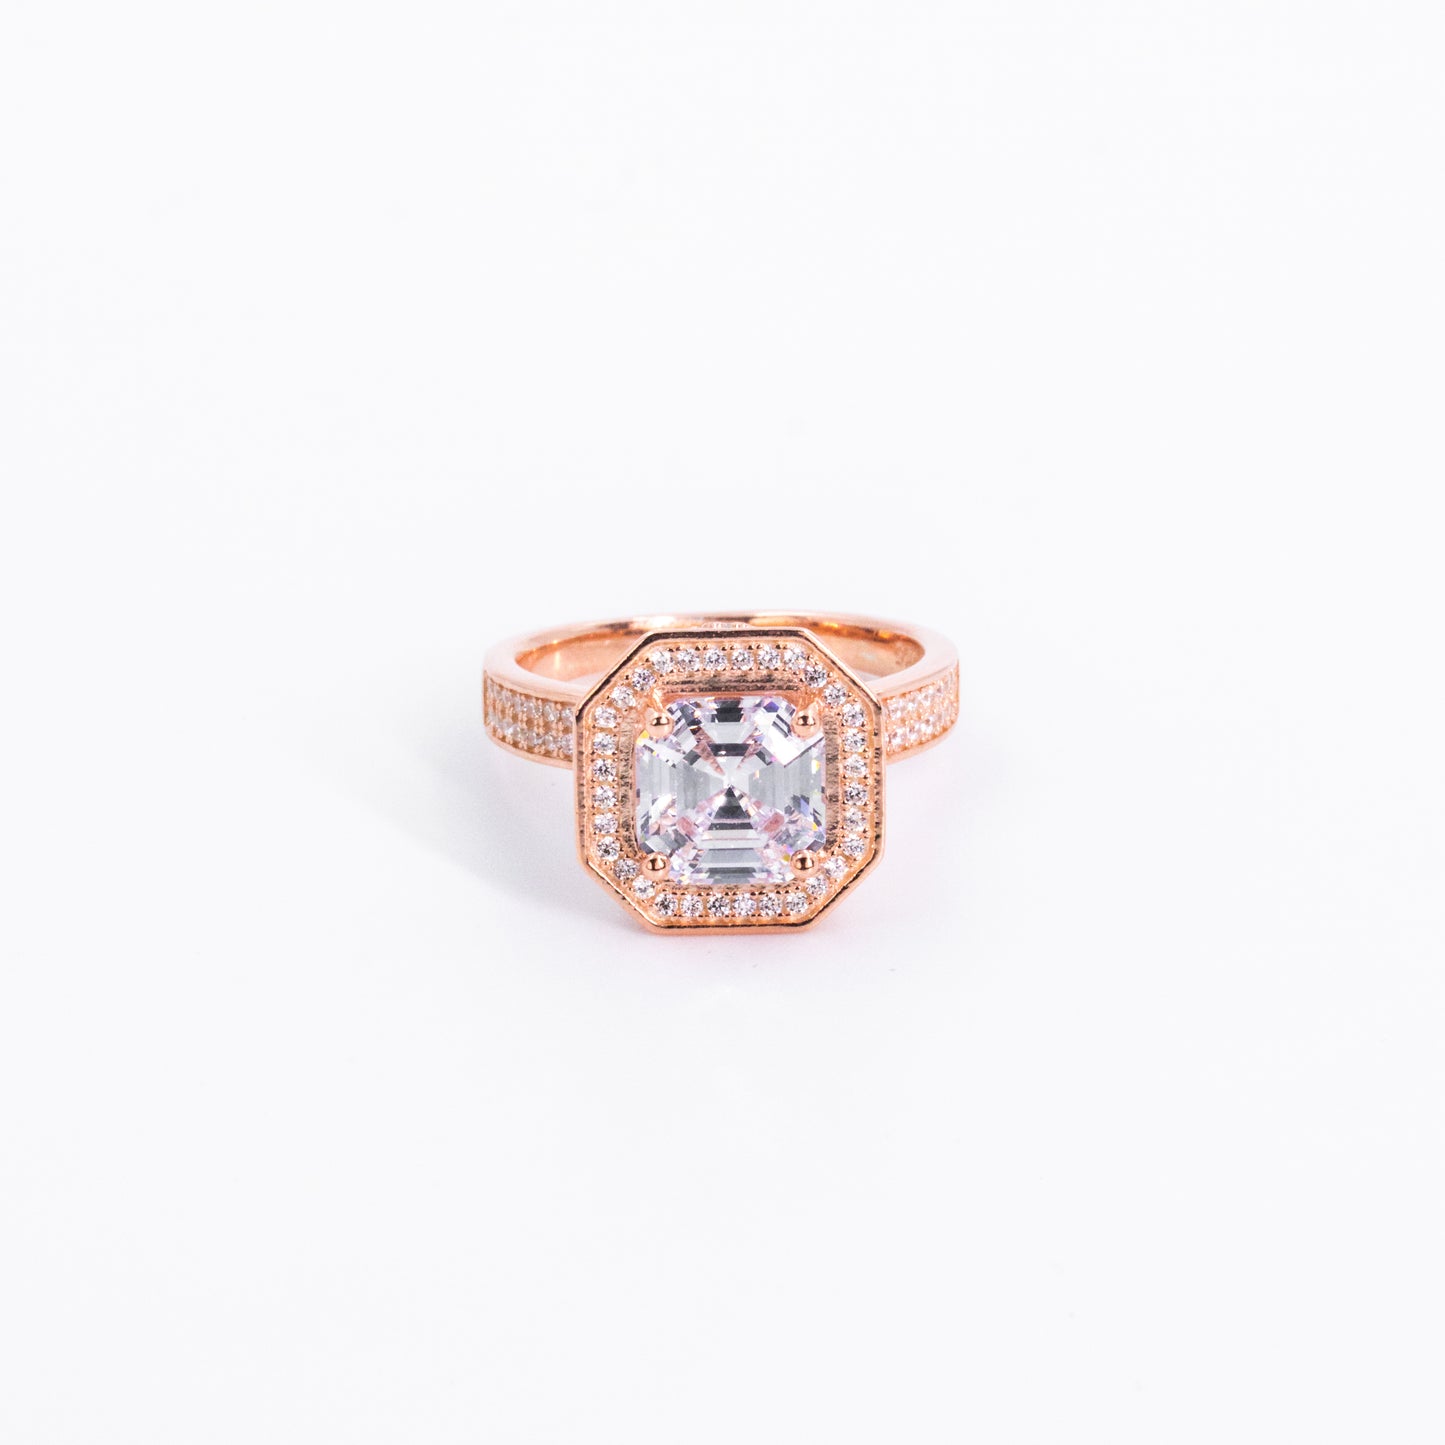 Rose Gold Crystal Sparkle Ring